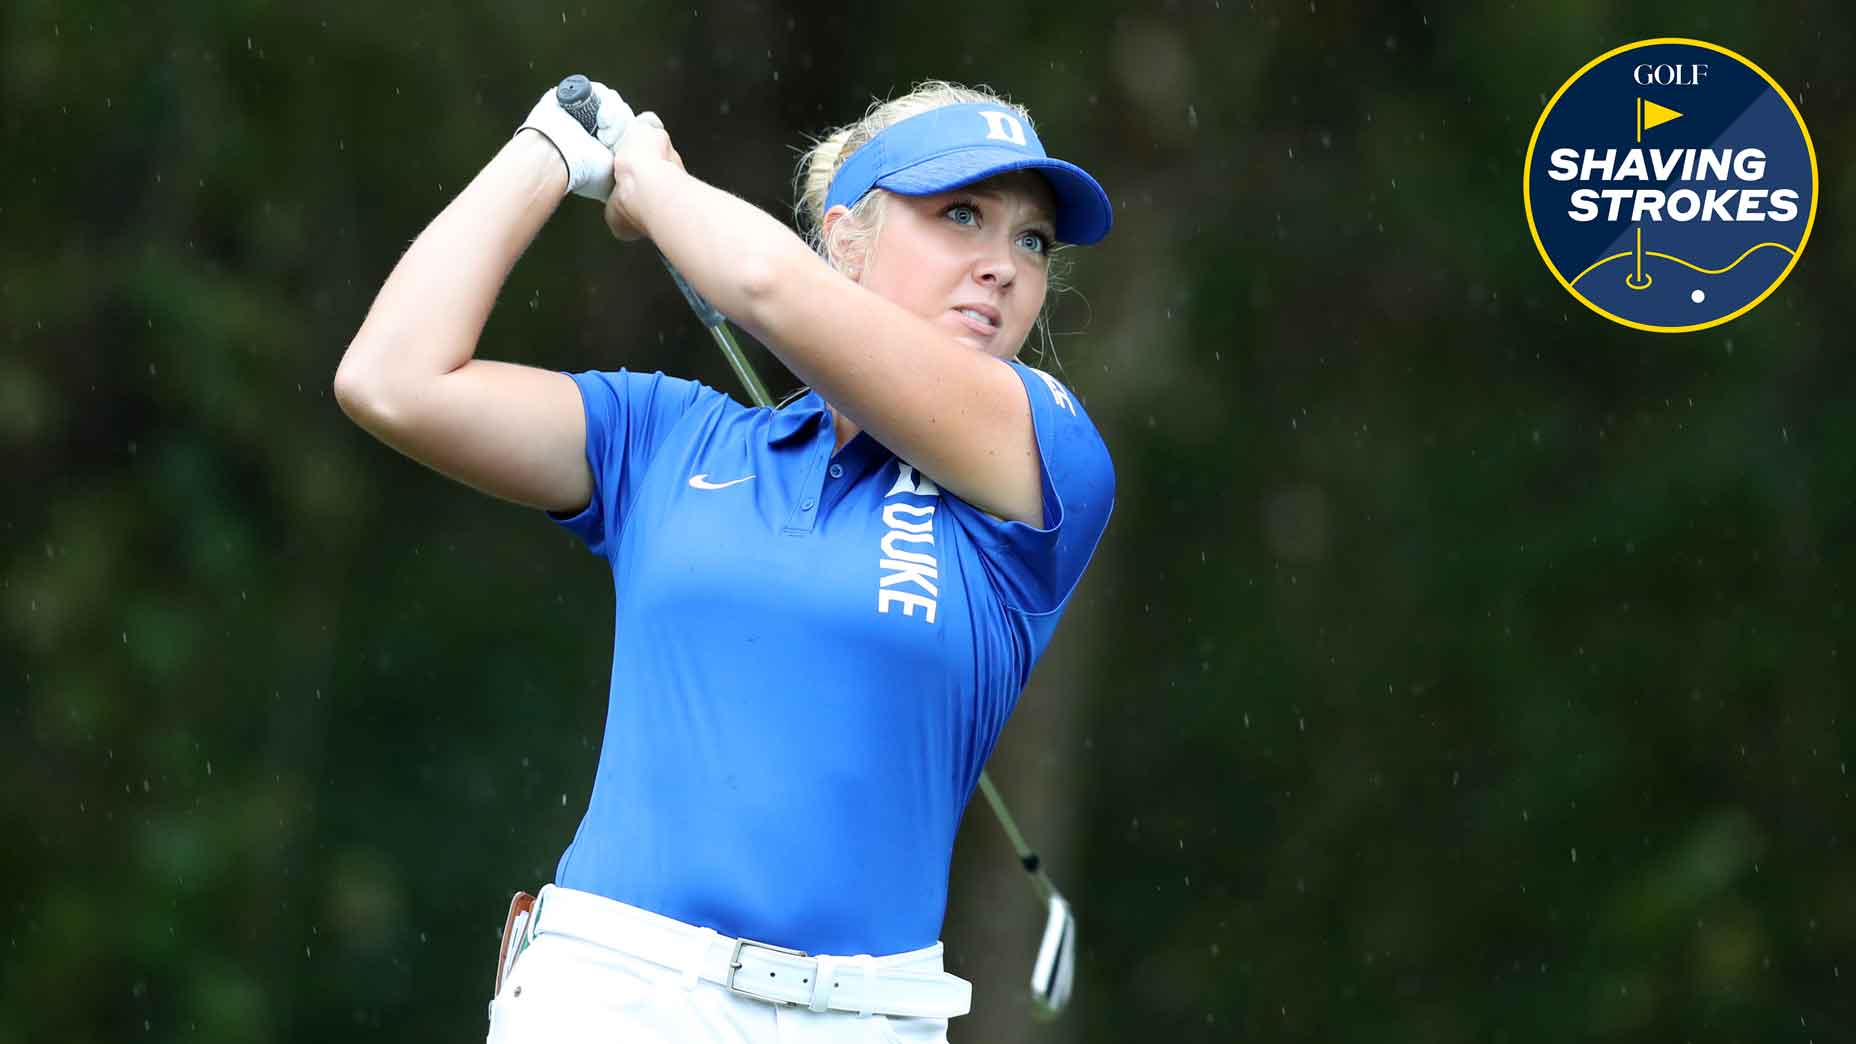 Pro golfer Erica Shepherd hits shot during golf tournament